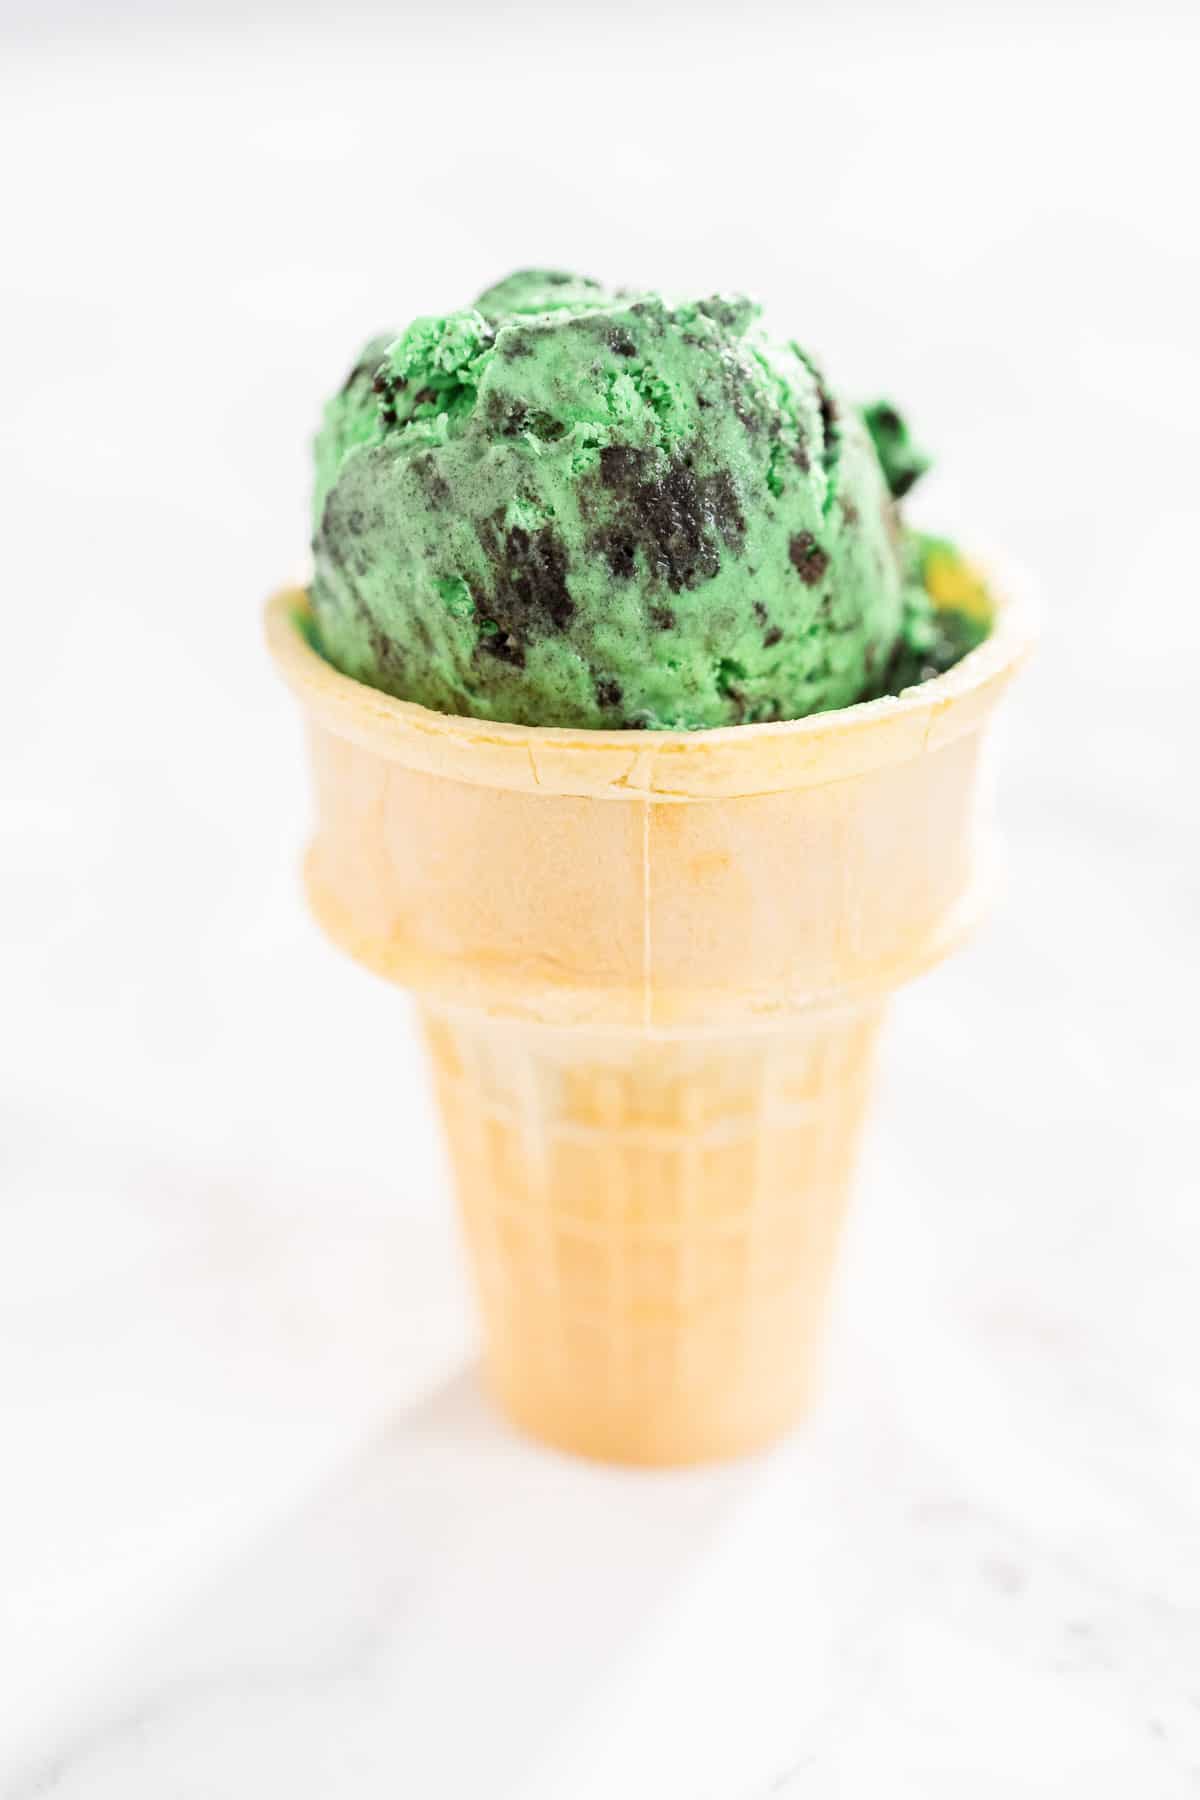 grasshopper ice cream in a cone sitting on the counter.